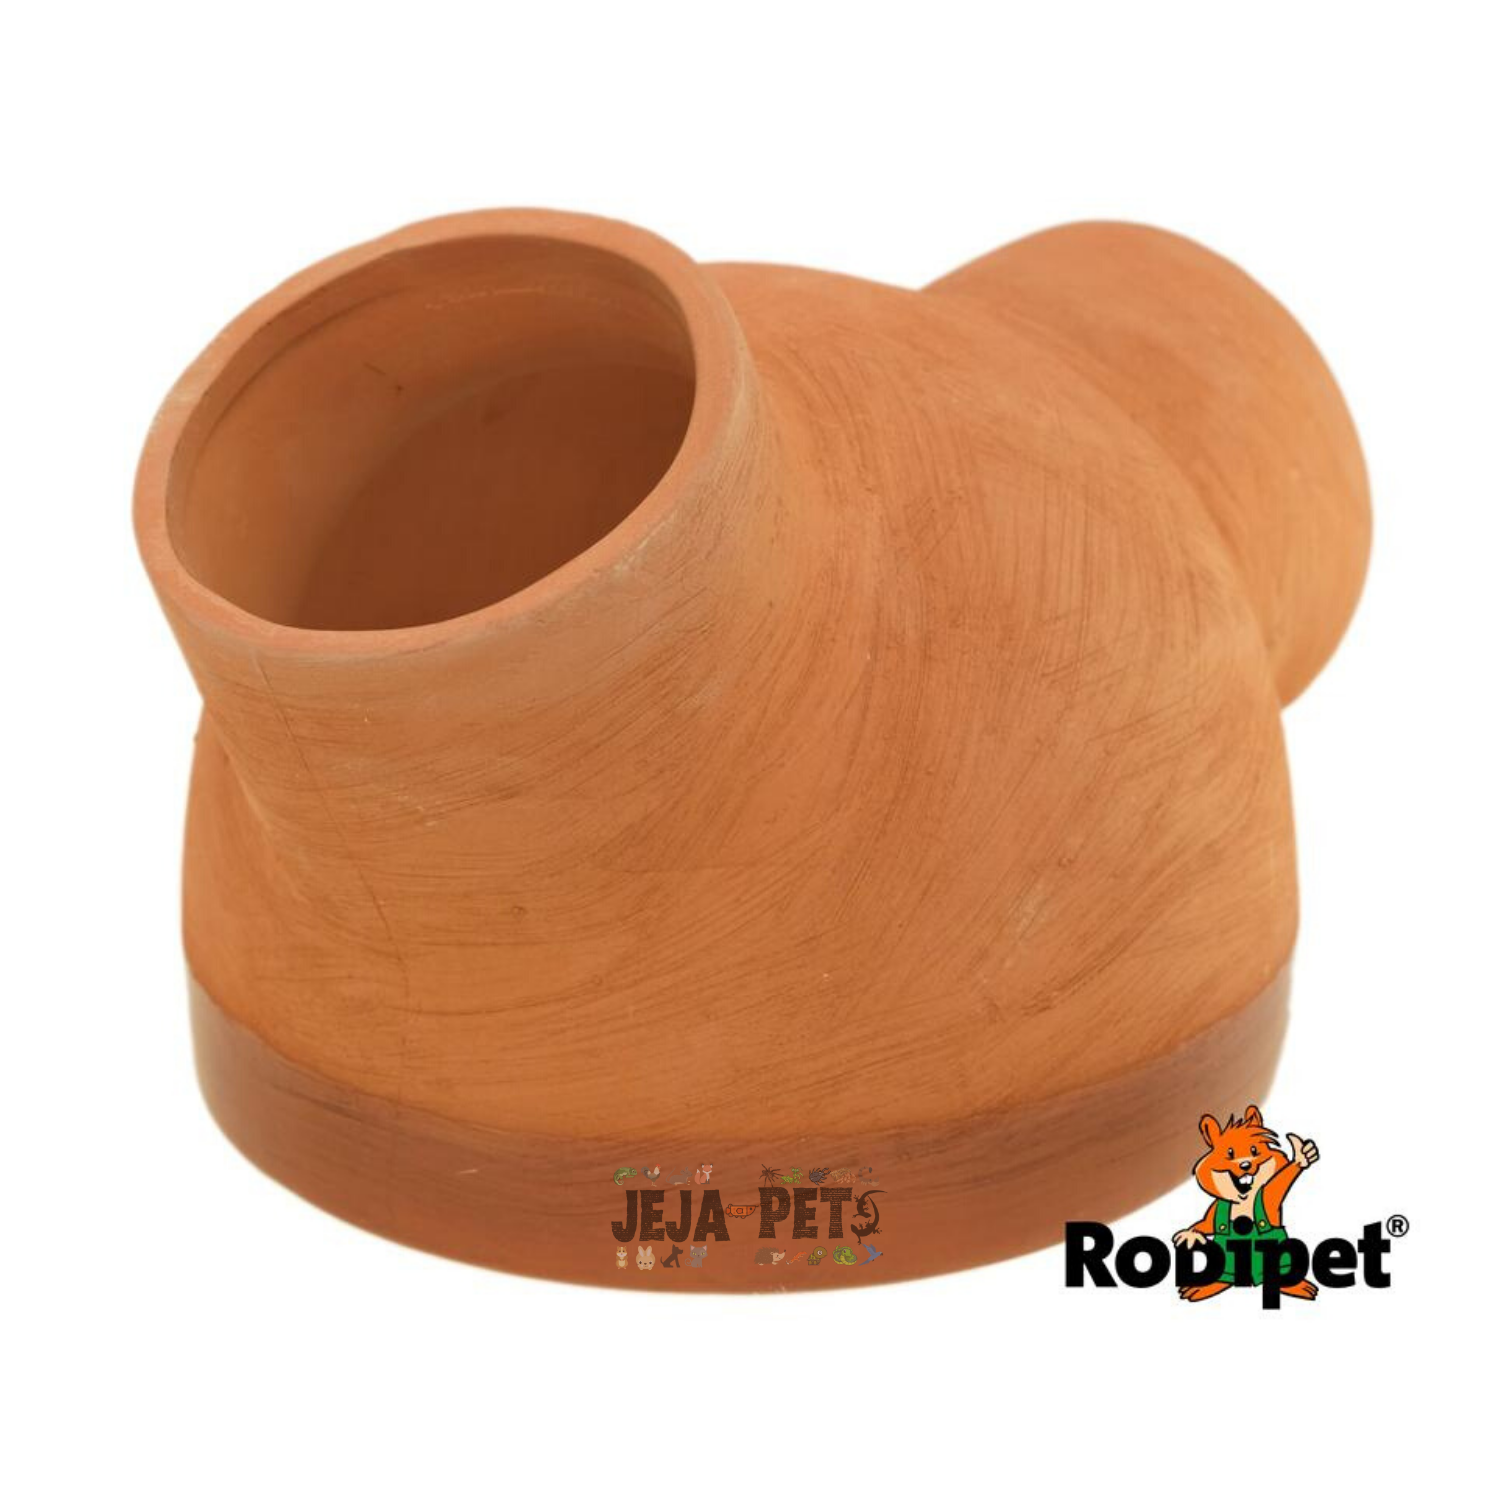 Rodipet EasyClean TERRA Ceramic Burrow - 16cm